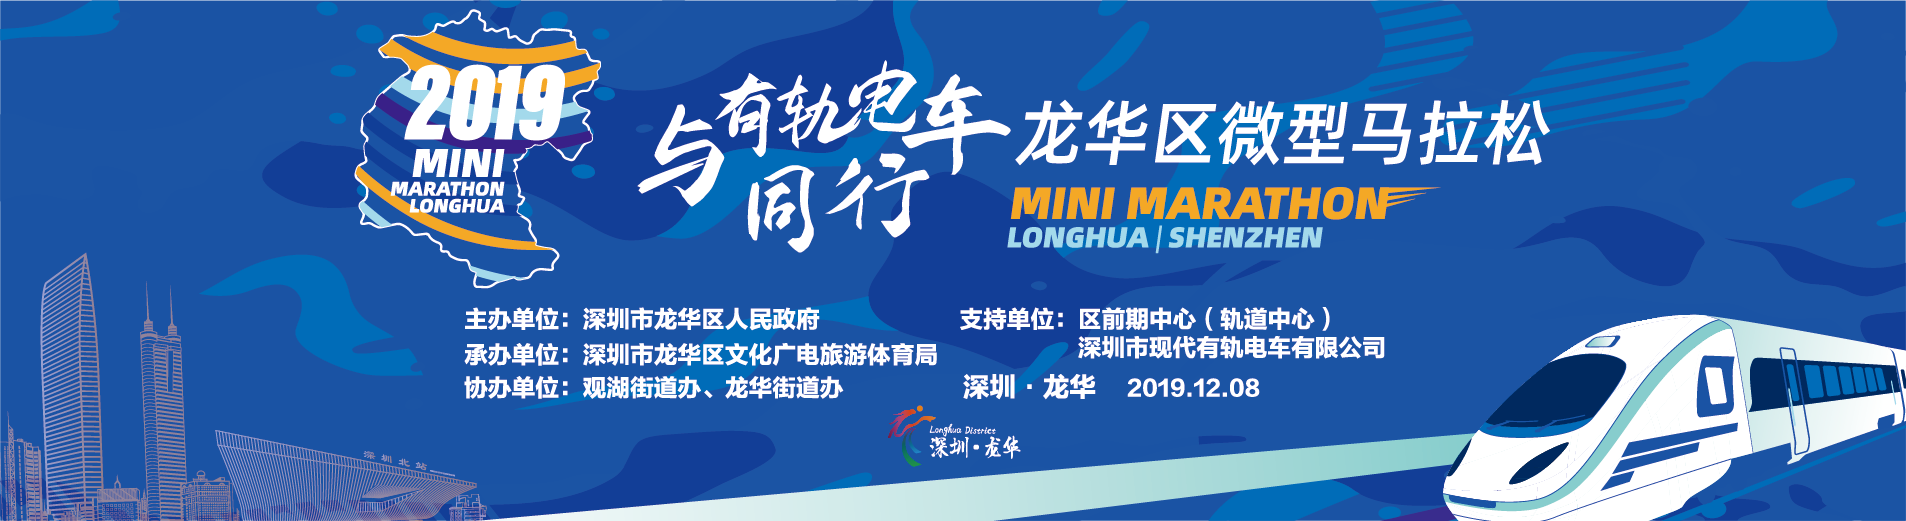 2019 Mini Marathon Longhua,longhua,longhua district,Longhua Government Online